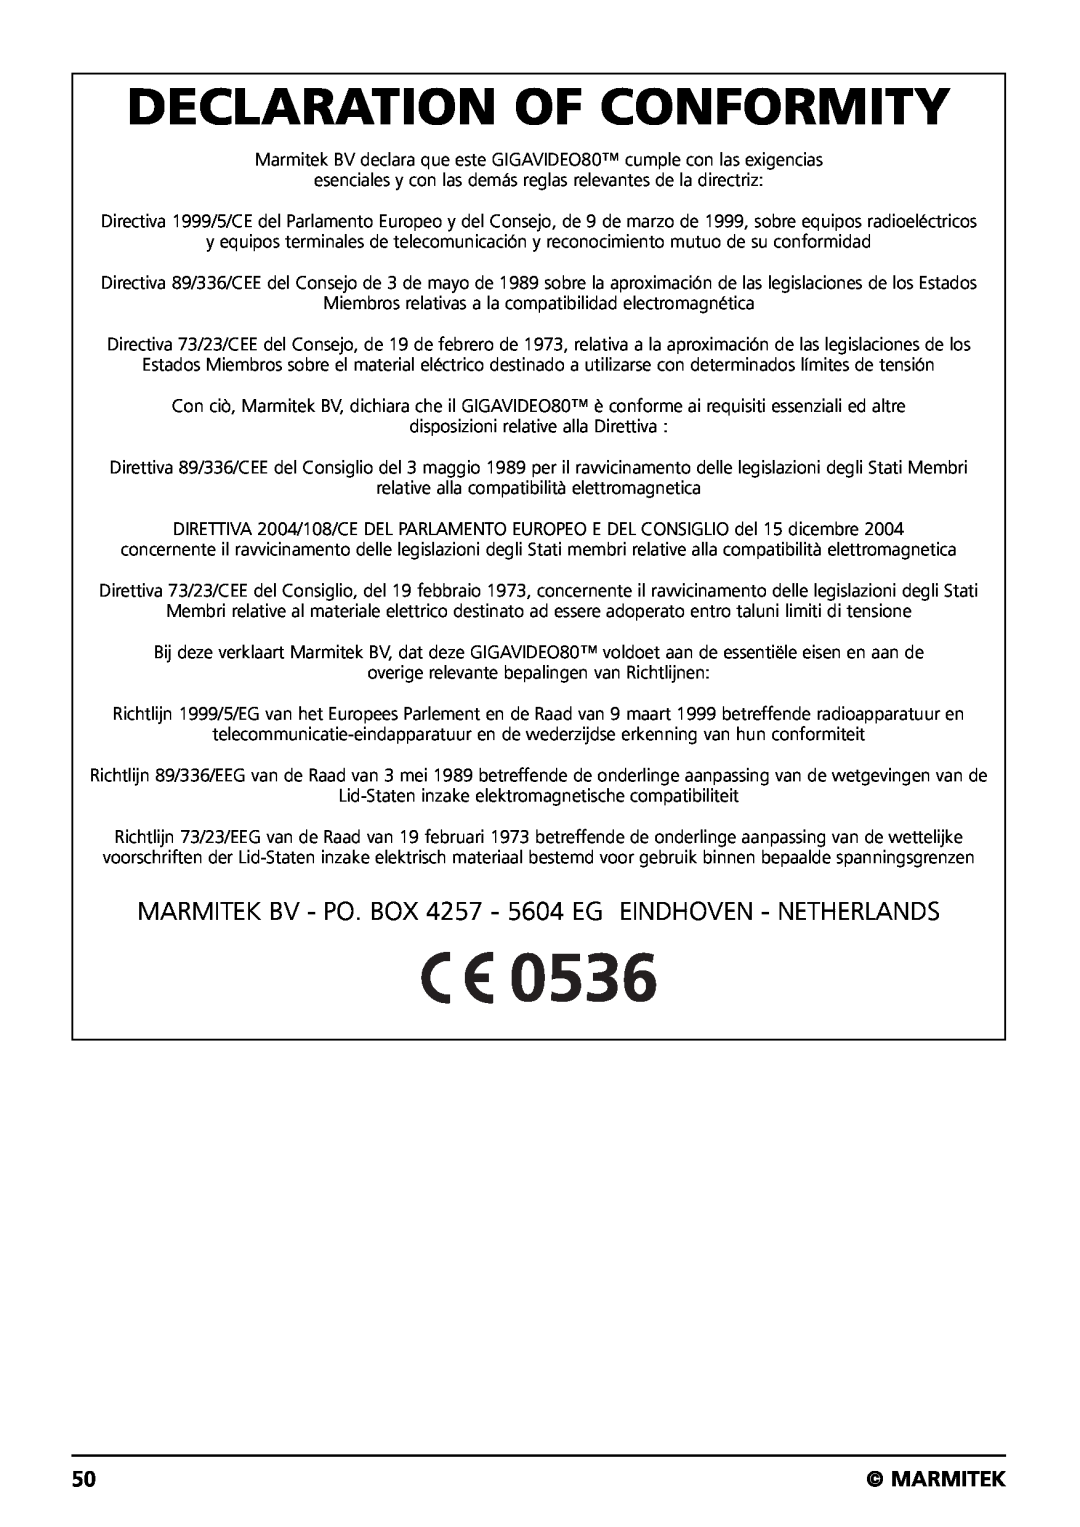 Marmitek GIGAVIDEO80 Declaration Of Conformity, MARMITEK BV - PO. BOX 4257 - 5604 EG EINDHOVEN - NETHERLANDS, Marmitek 